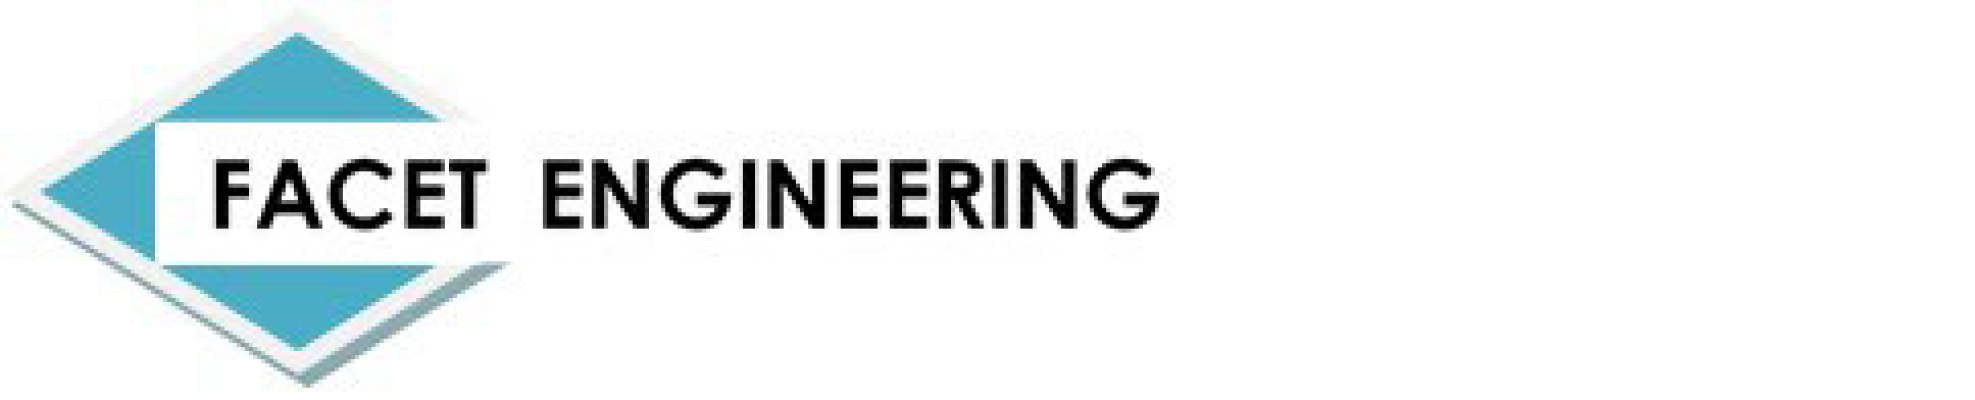 Facet Engineering logo 